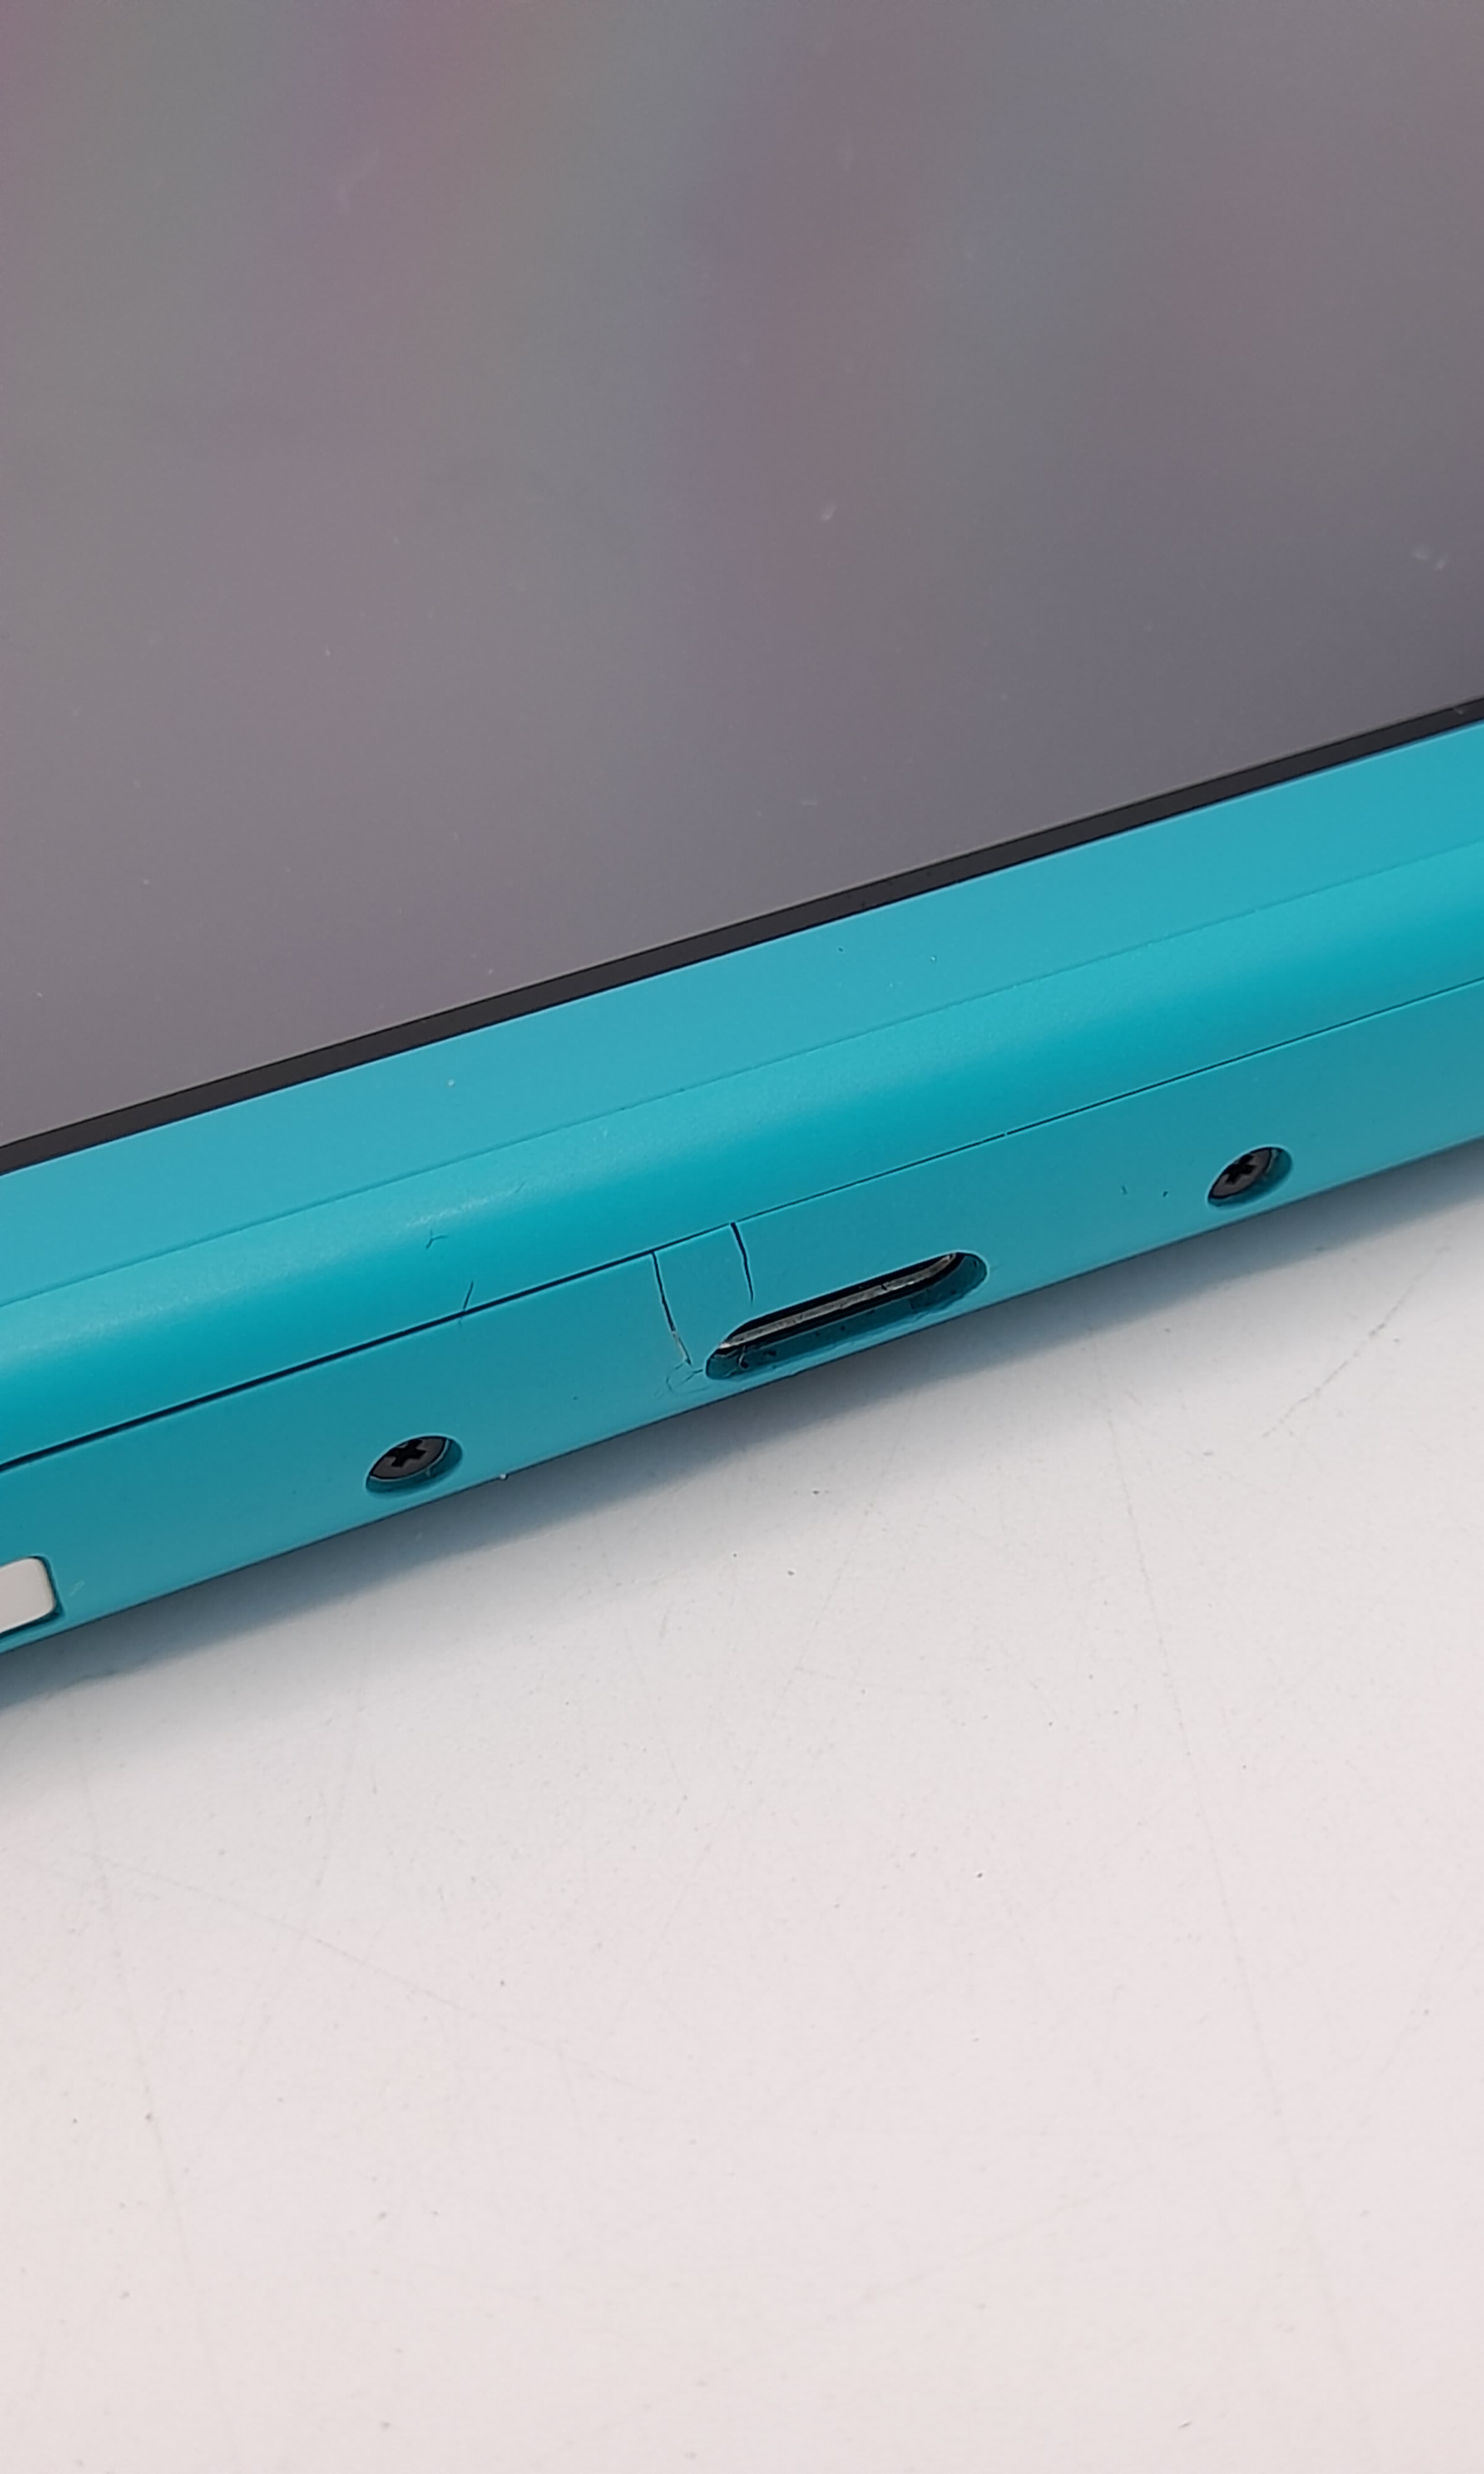 Foto van Nintendo Switch Lite Turquoise - Mooi